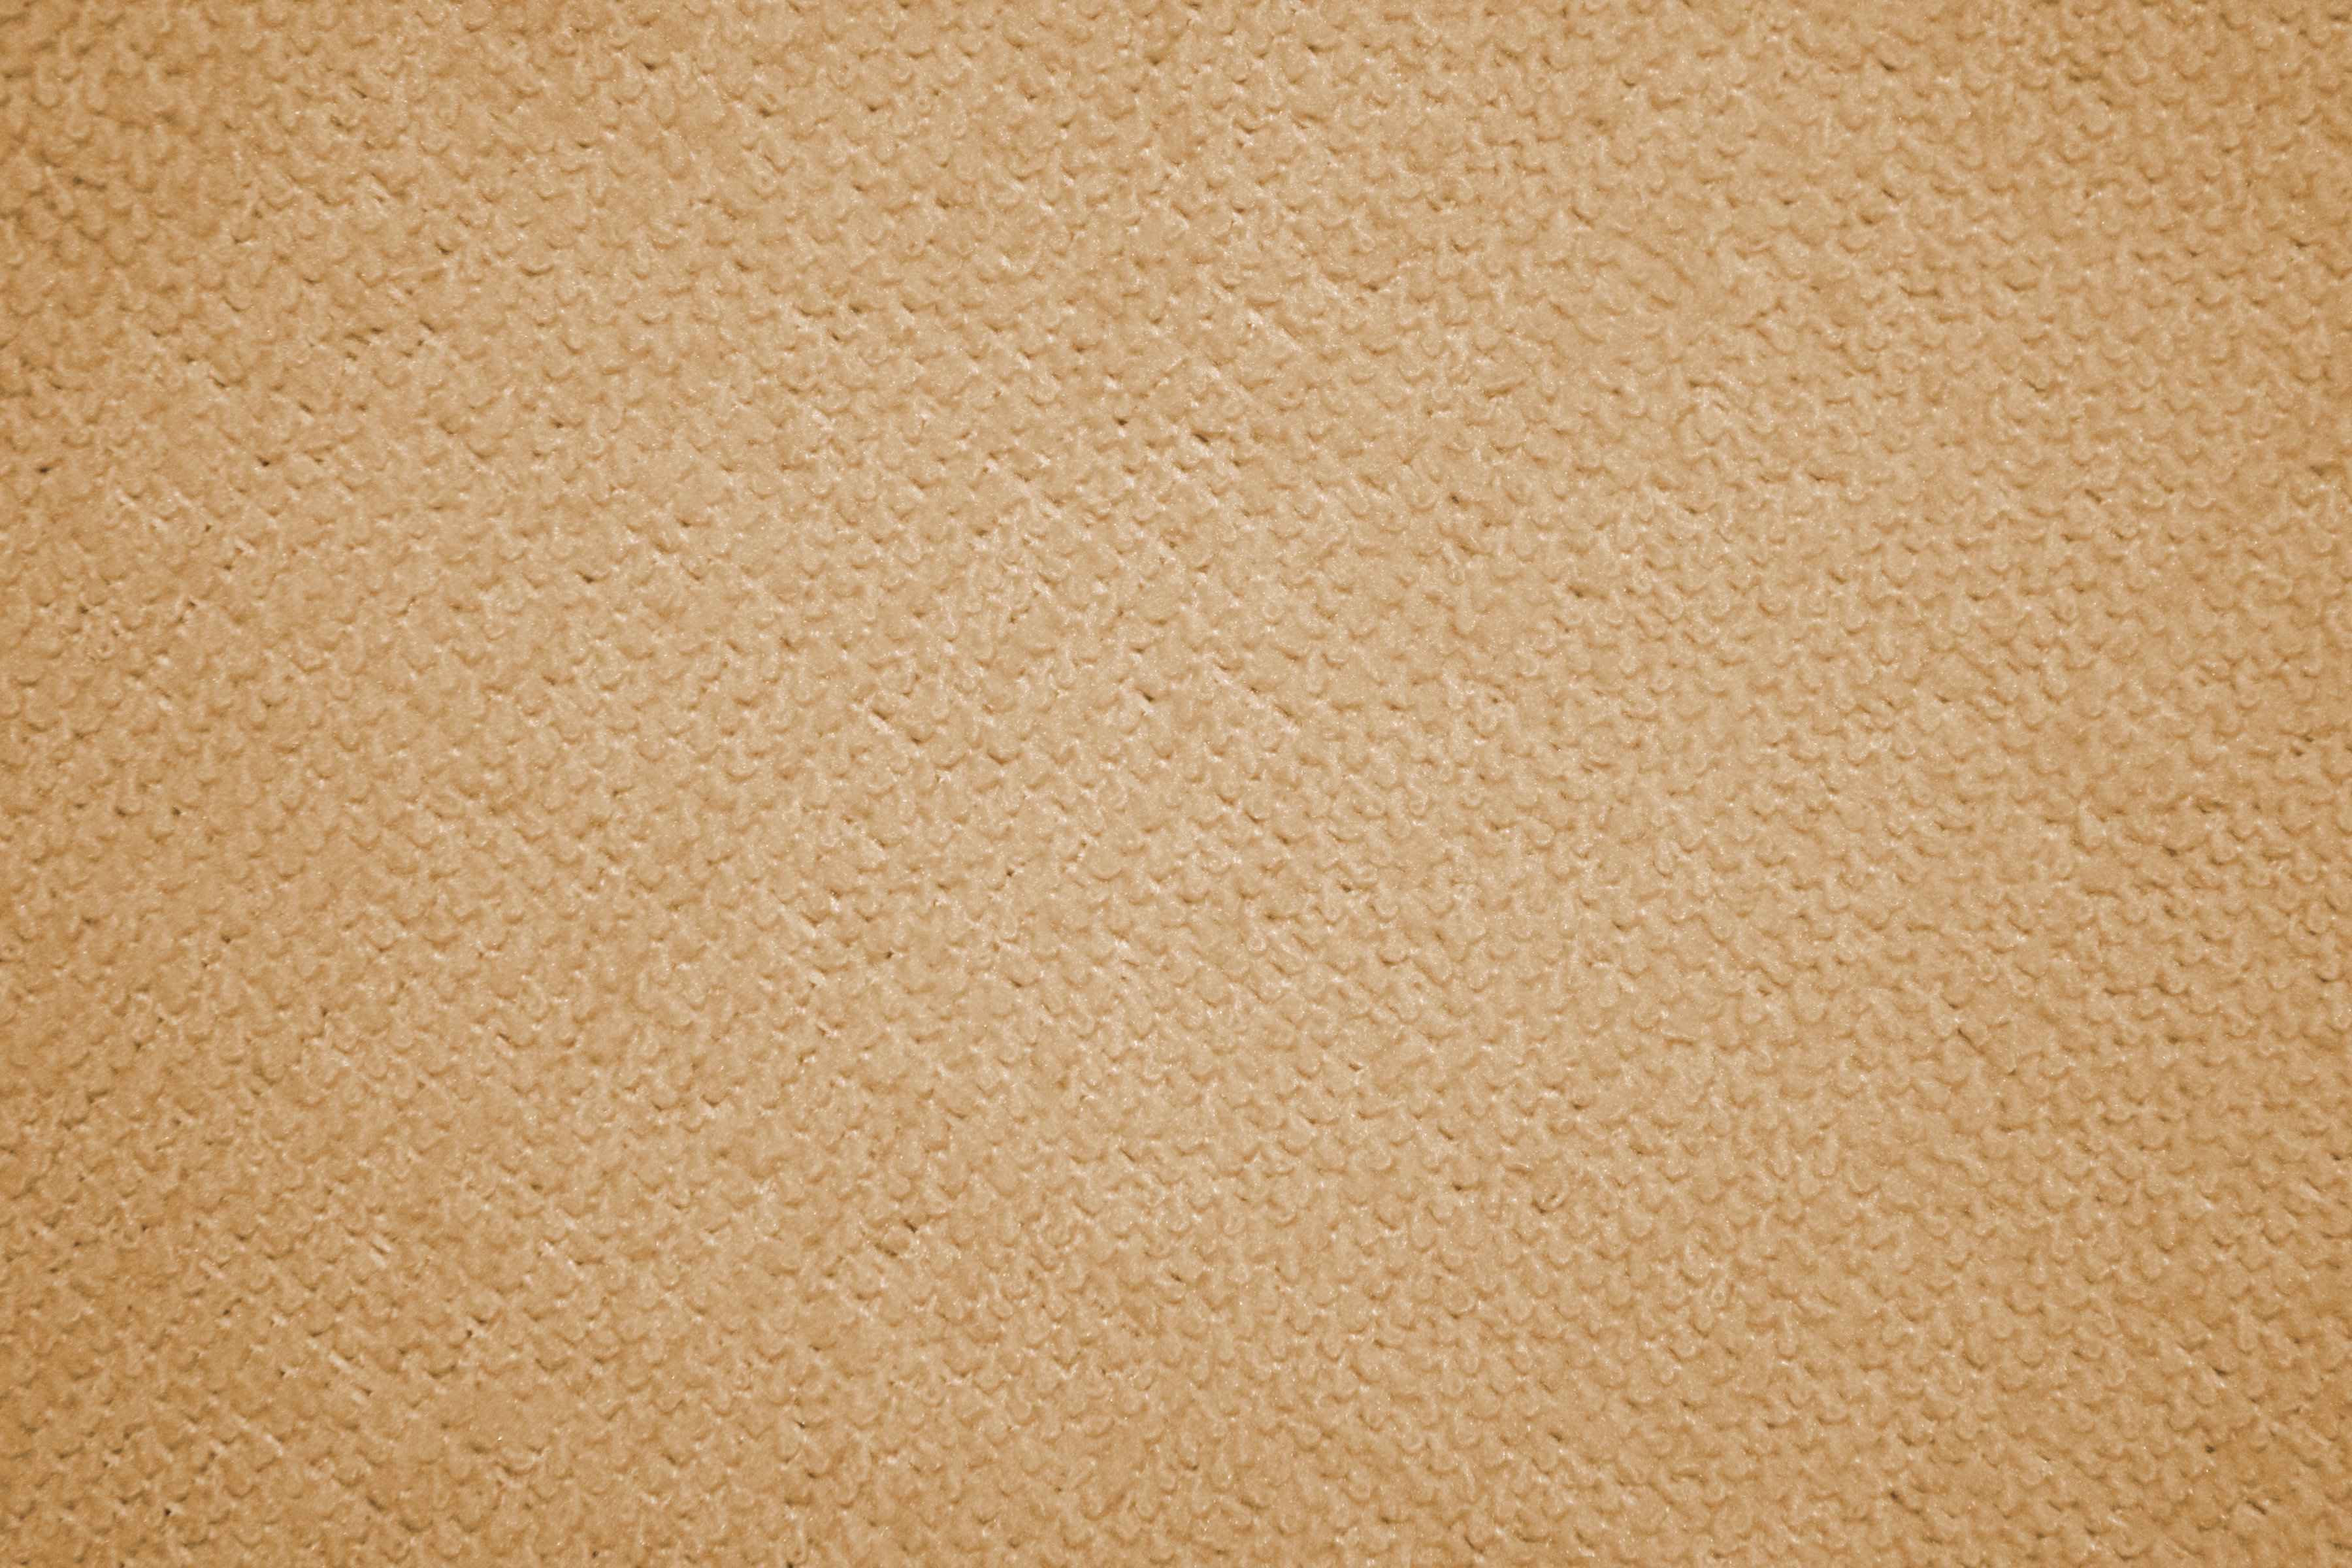 Tan Microfiber Cloth Fabric Texture Picture Photograph Photos